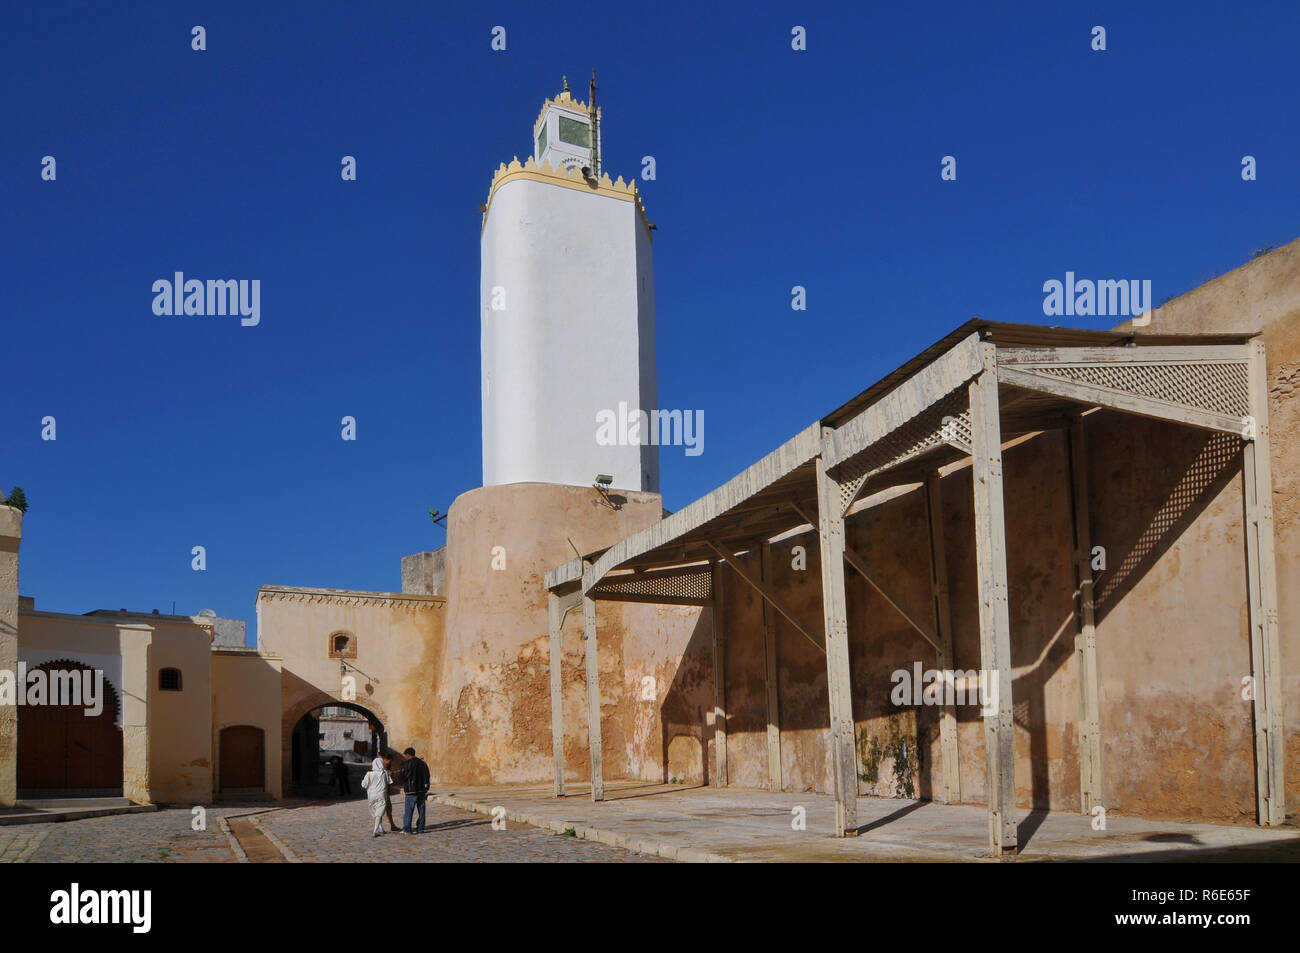 Grande mosquée ancienne cité portugaise El Jadida, Maroc Banque D'Images